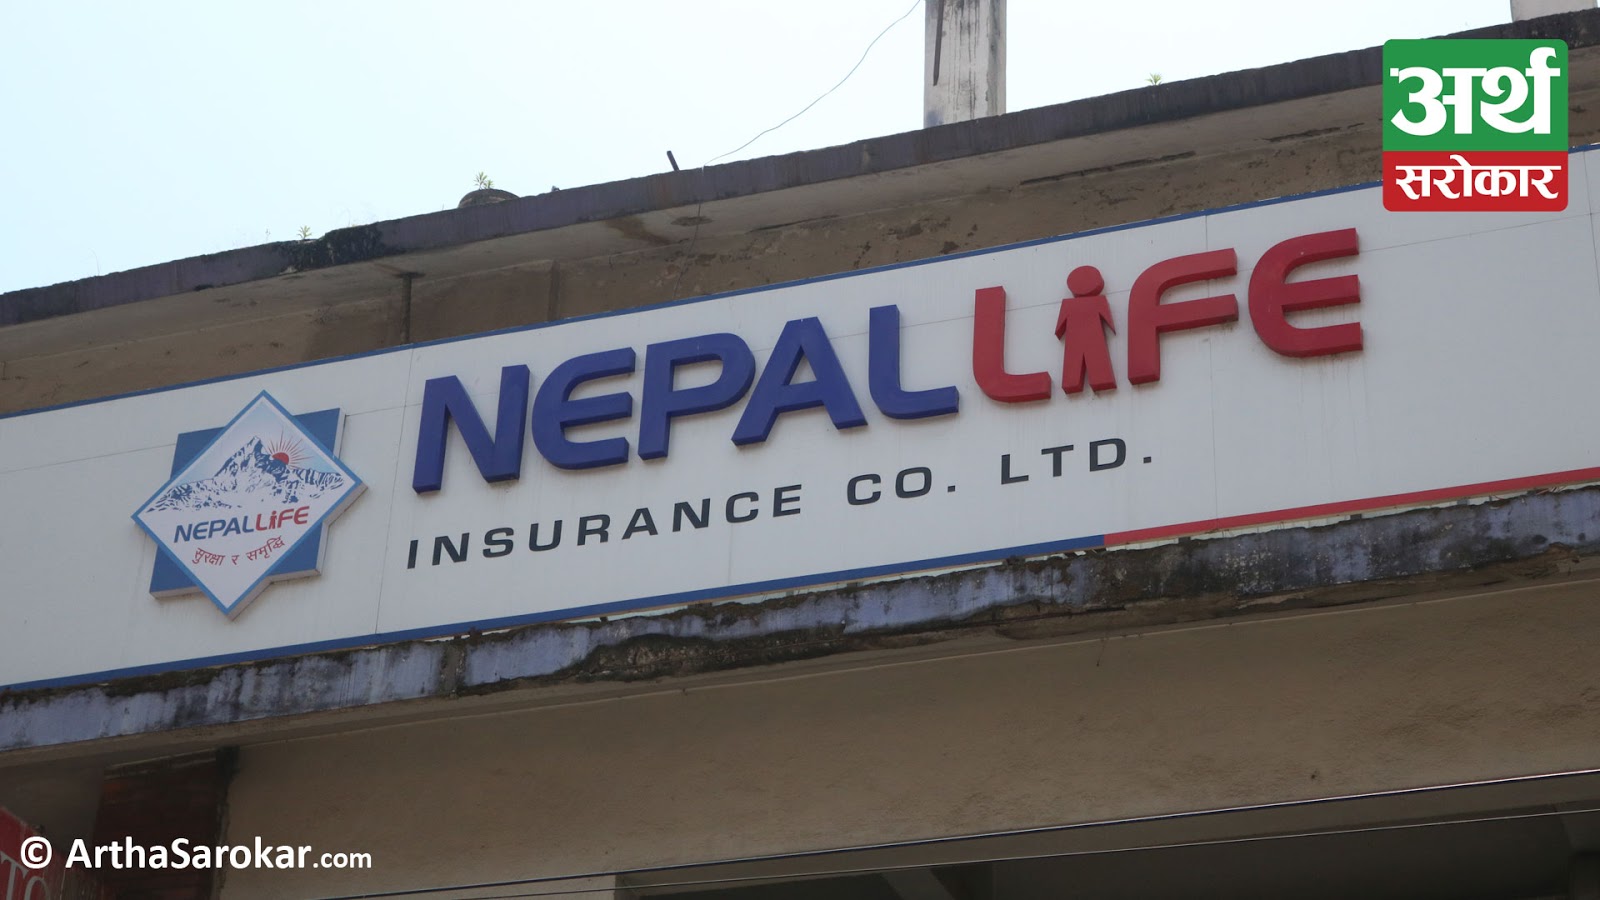 Nepal Life Insurance provides assistance